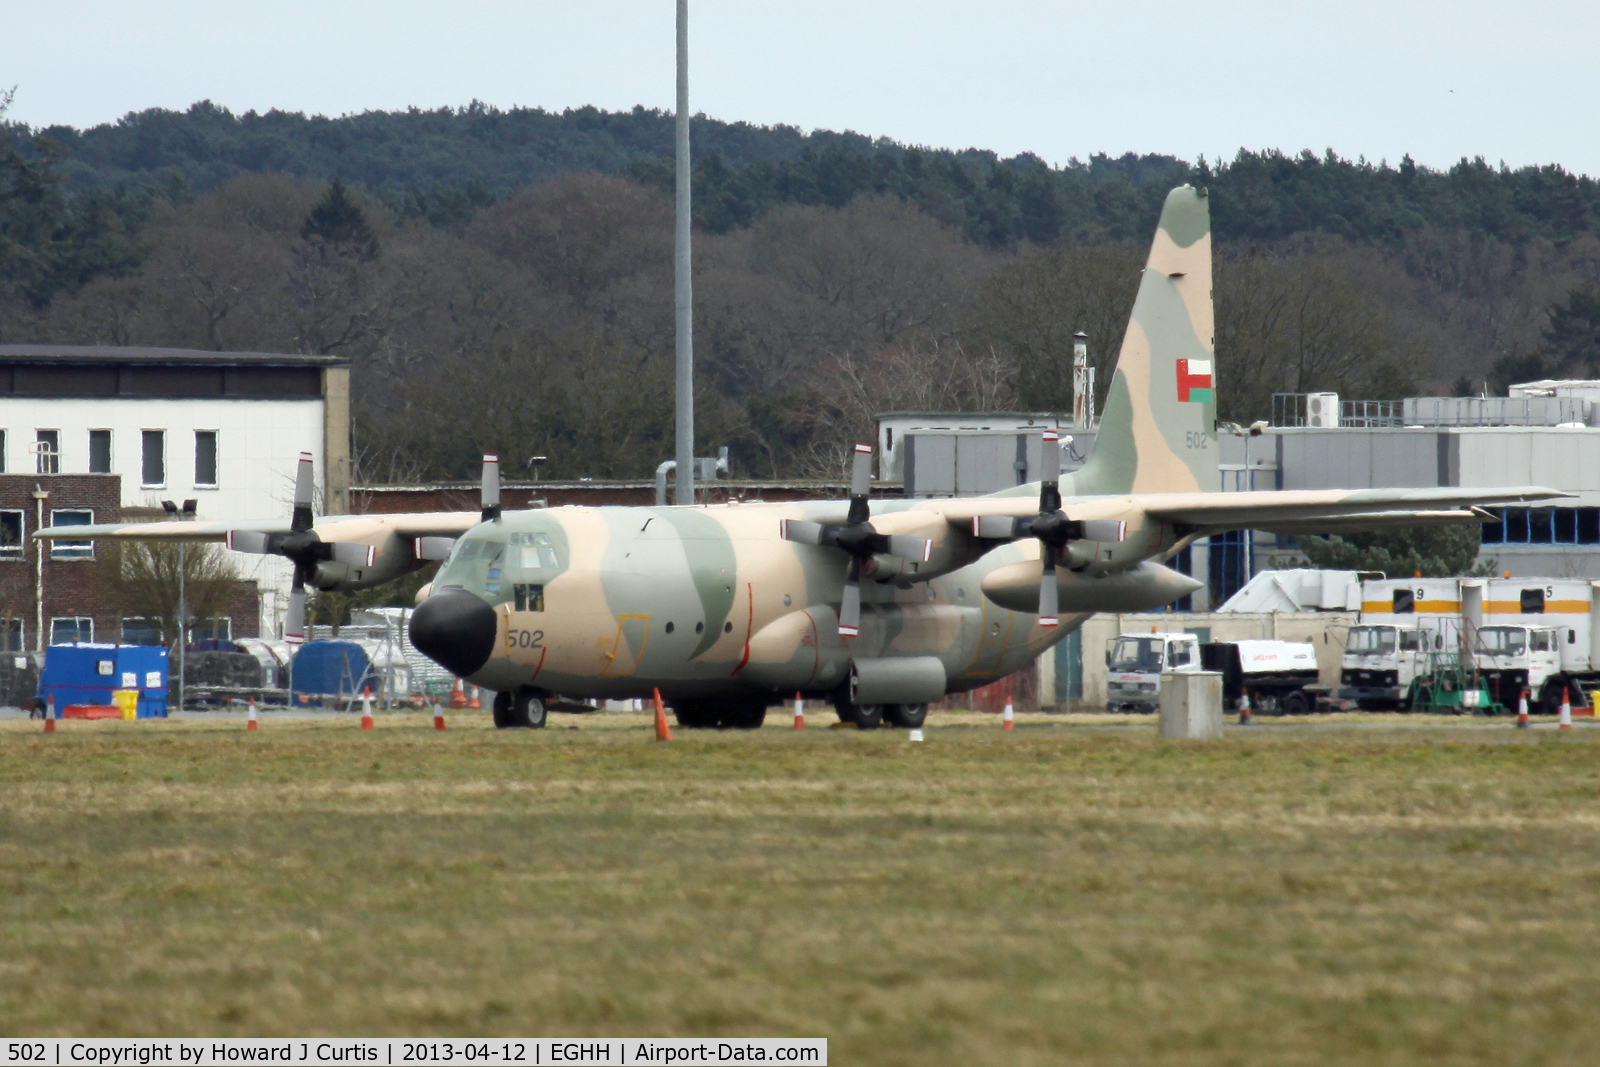 502, 1981 Lockheed C-130H Hercules C/N 4916, Royal Air Force of Oman; now wearing Western style numerals.